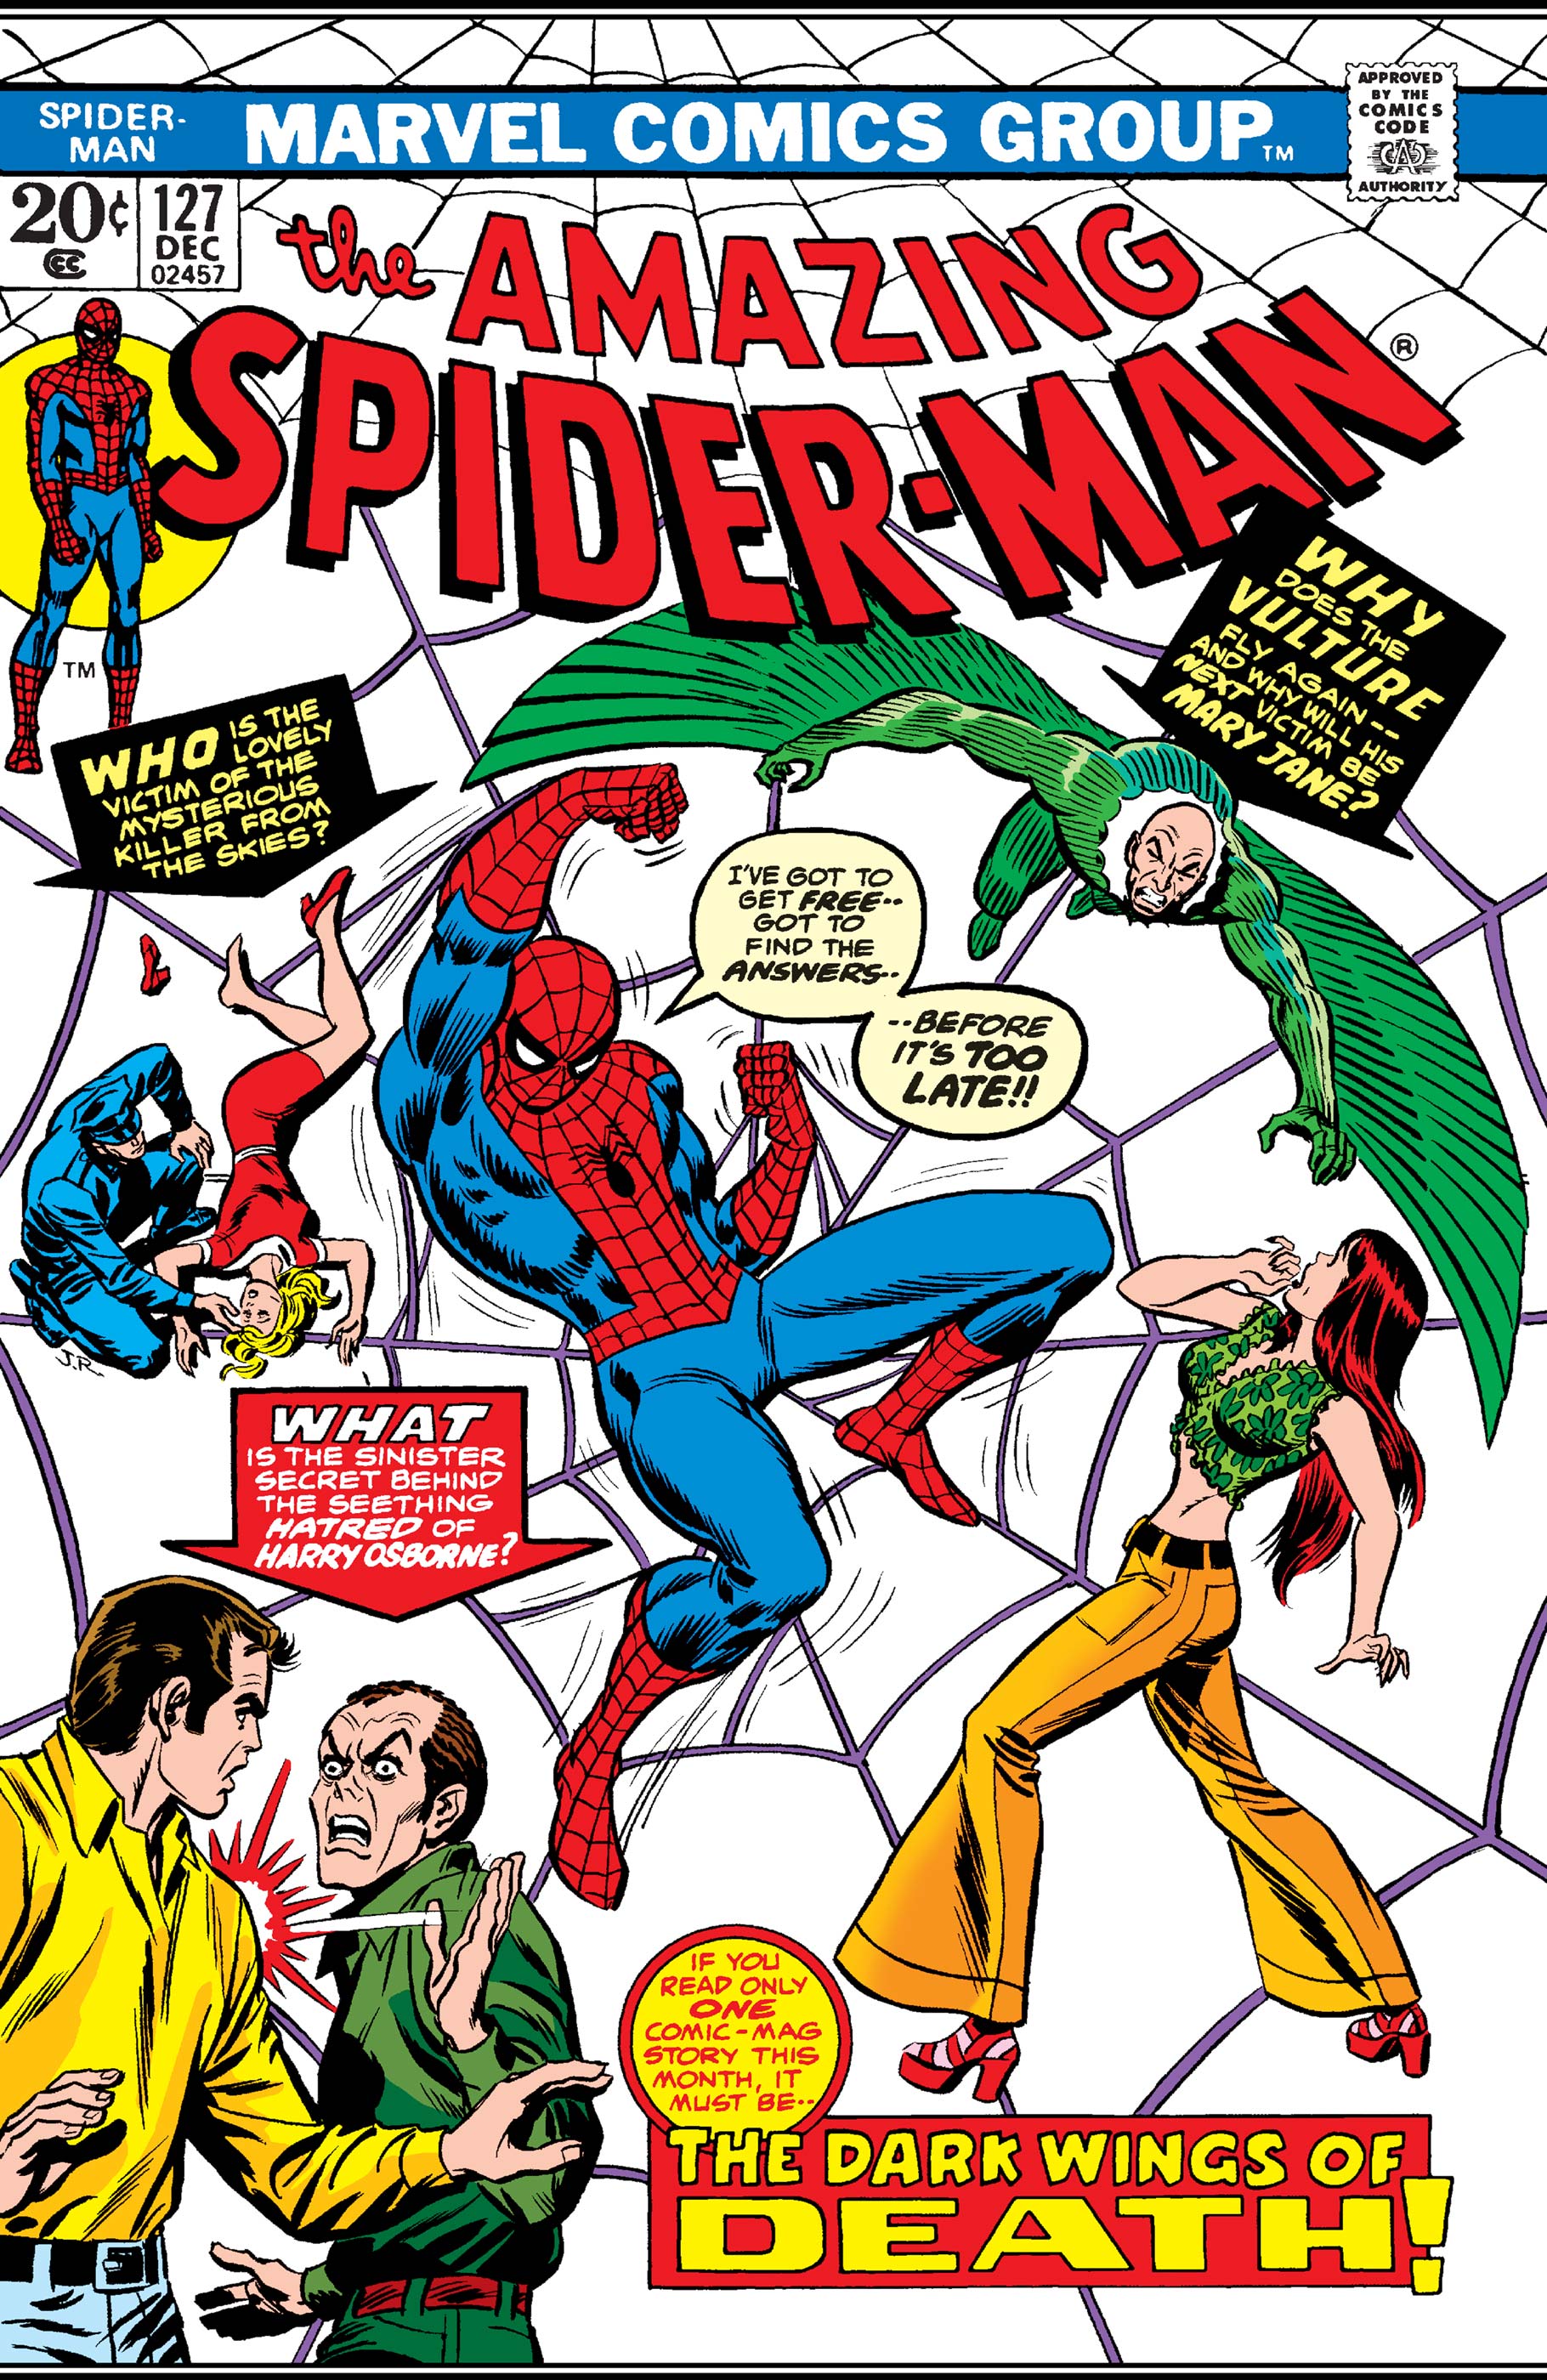 The Amazing Spider-Man (1963) #127